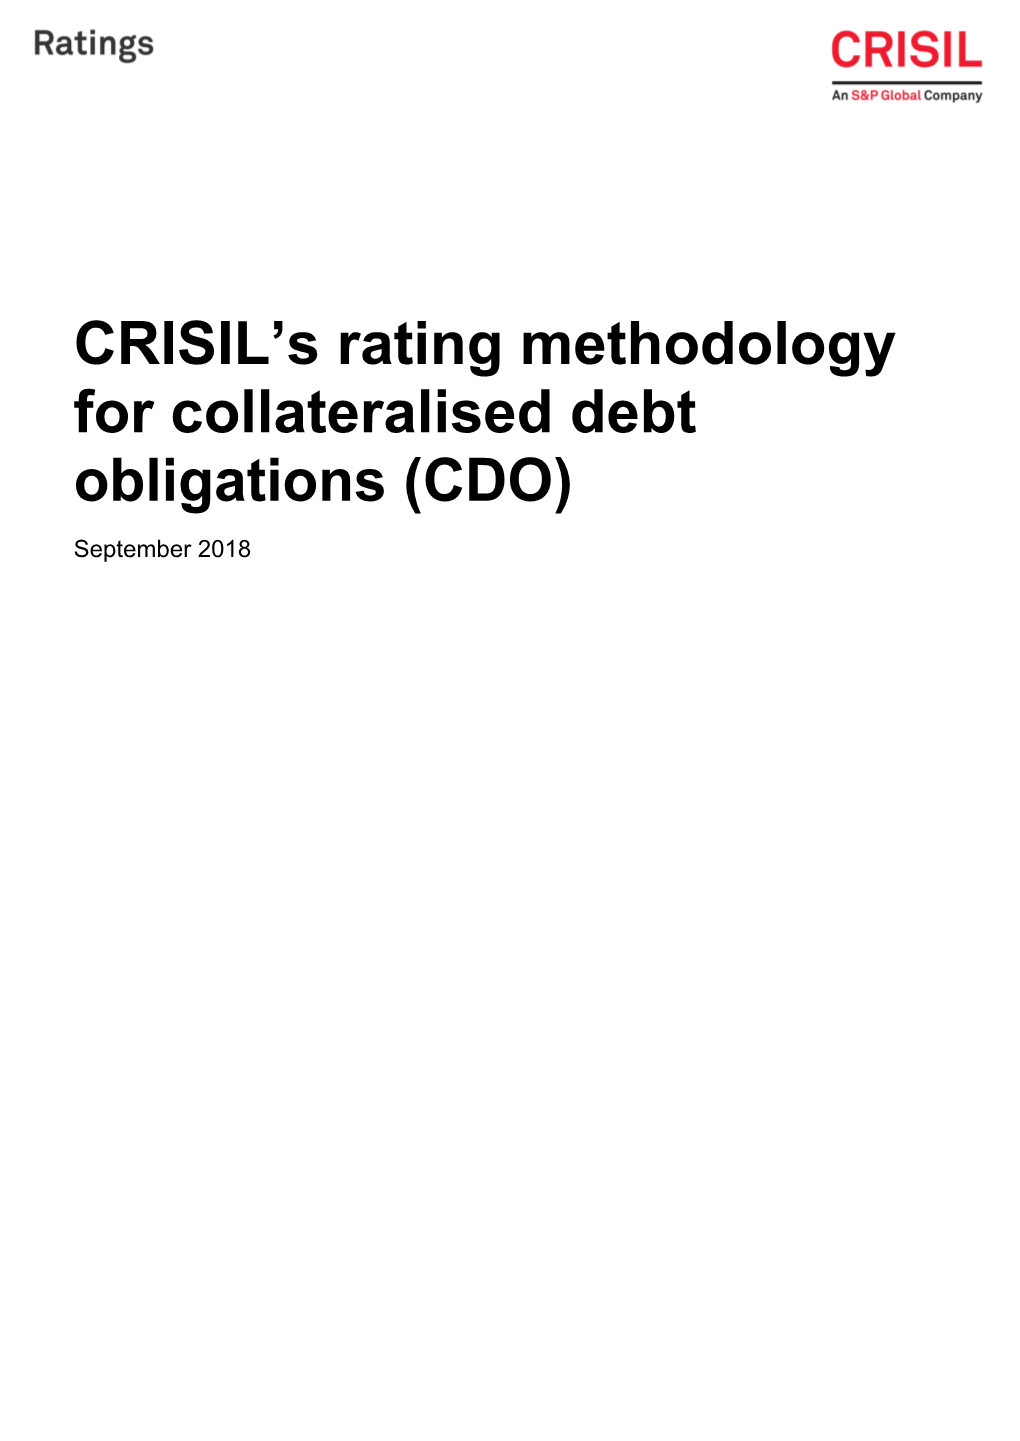 CRISIL's Rating Methodology for Collateralised Debt Obligations (CDO)